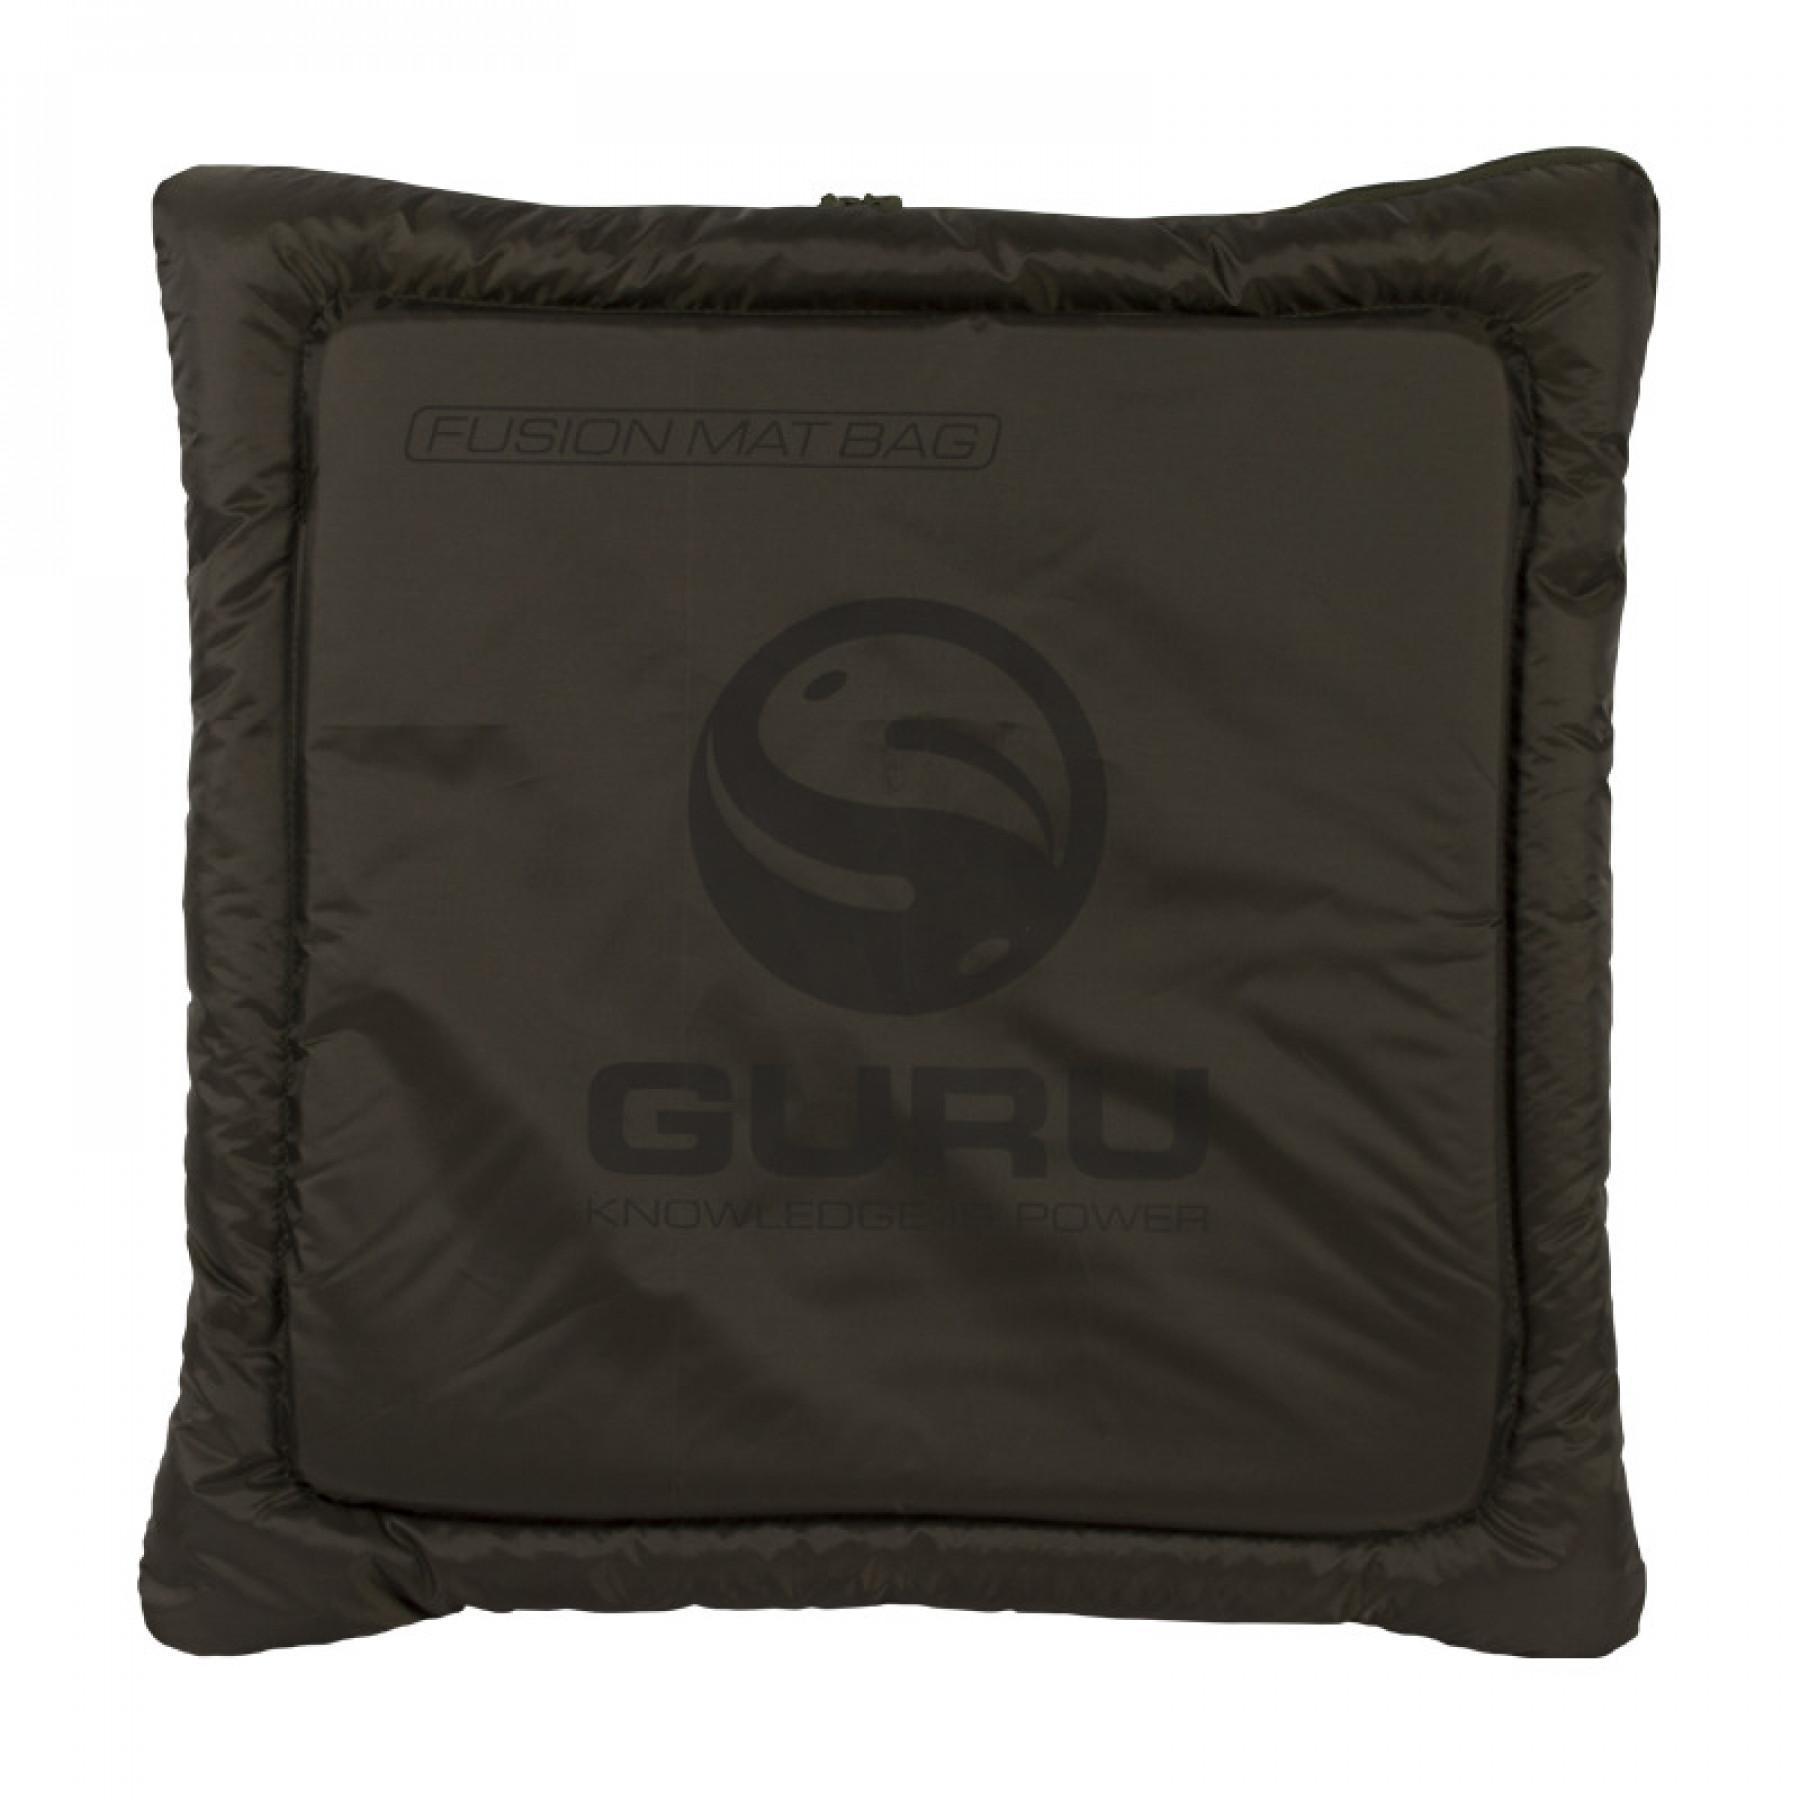 Alfombra de recepción Guru Fusion Mat Bag